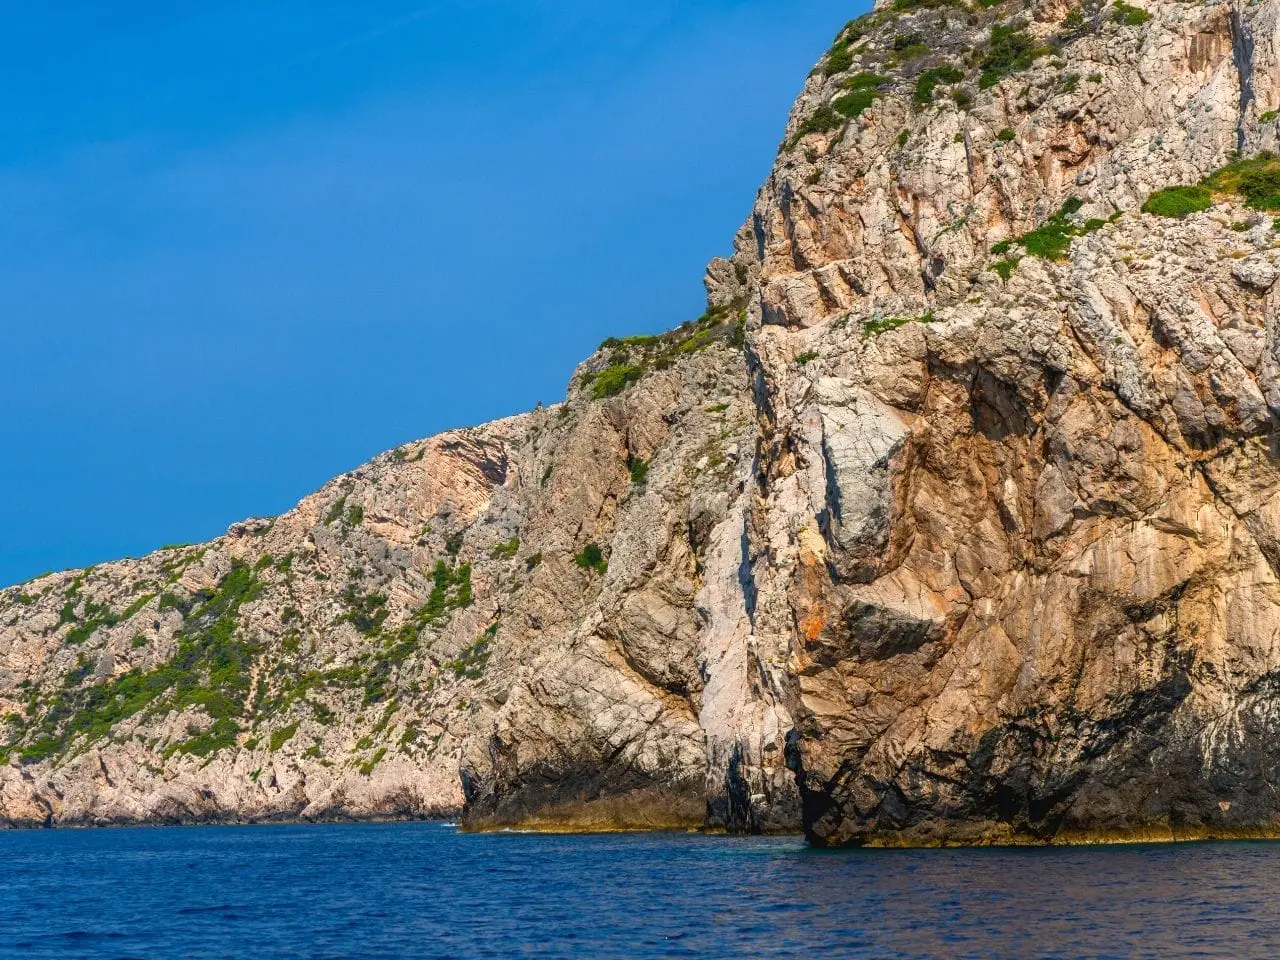 Cliffs on Bisevo Island in the Adriatic sea